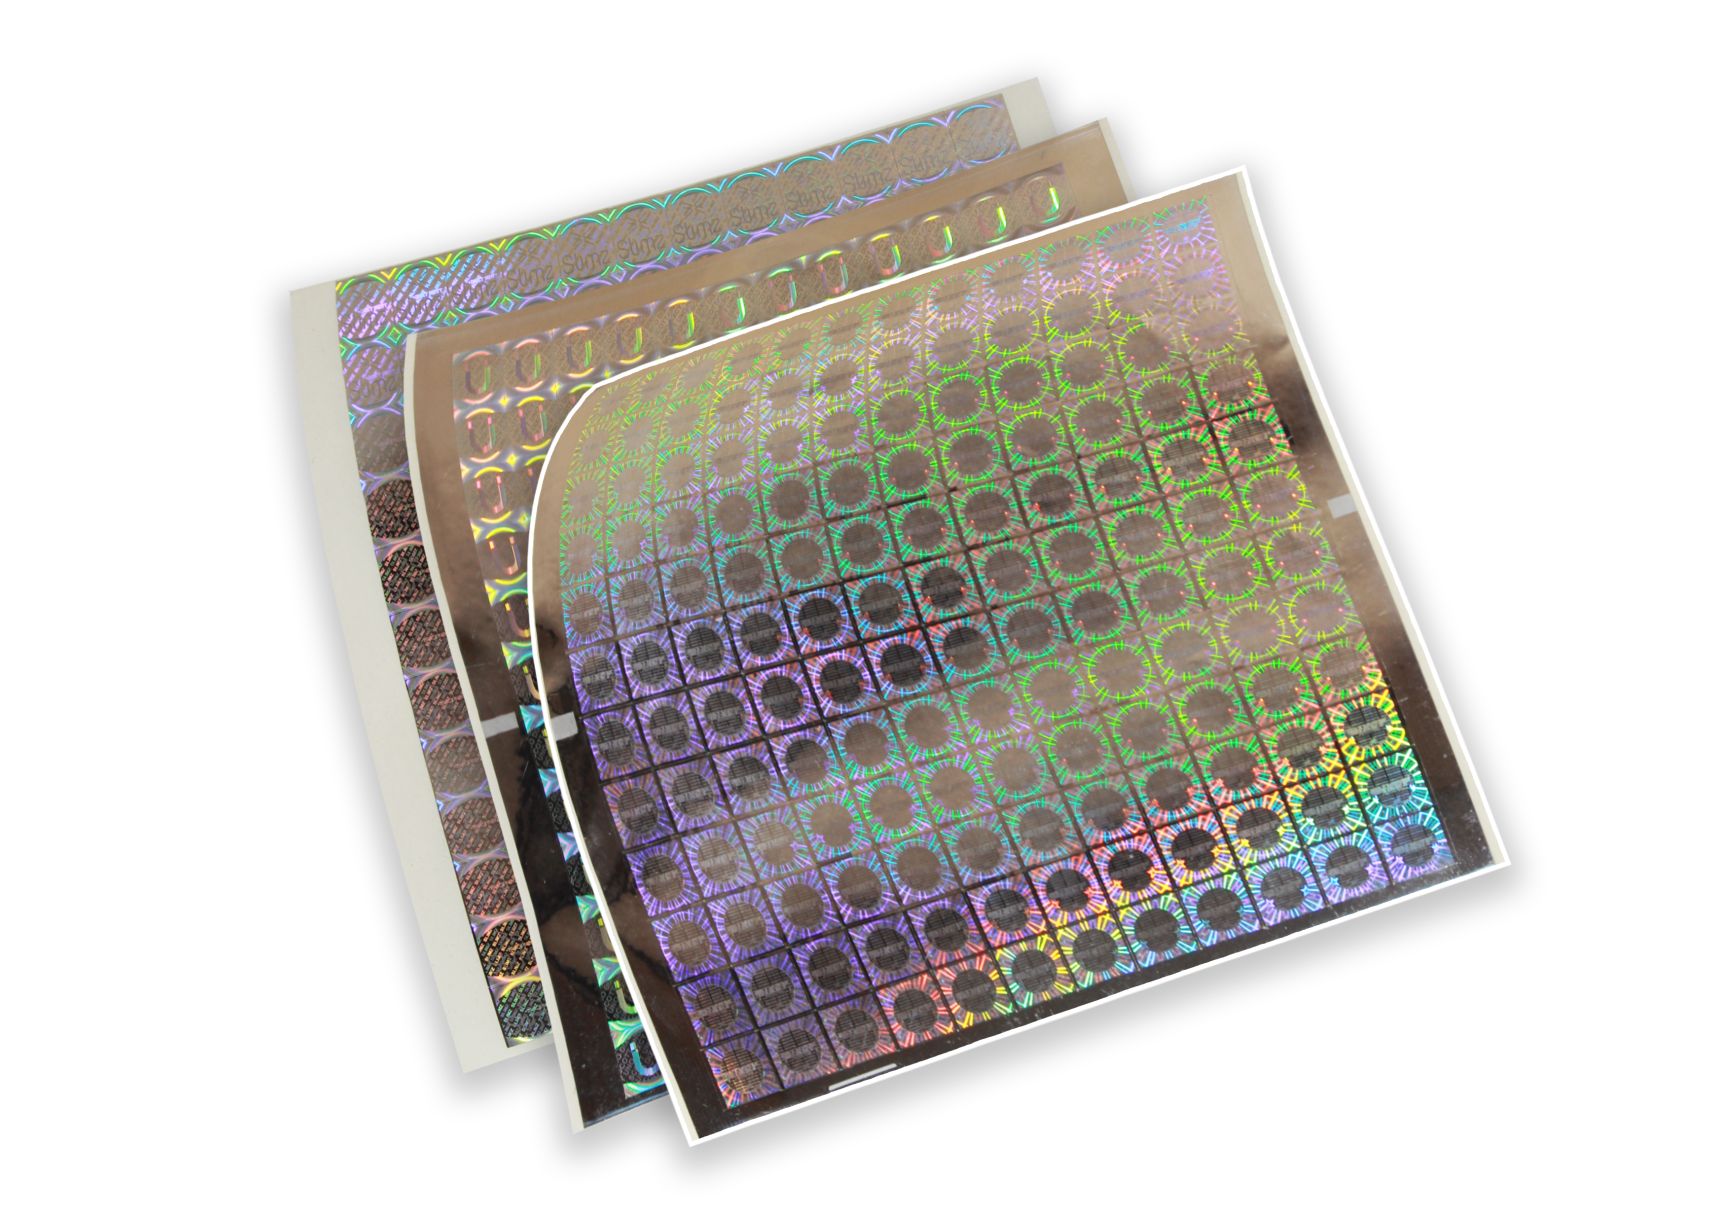 Hologram Stickers Manufactures - Matrixhologram